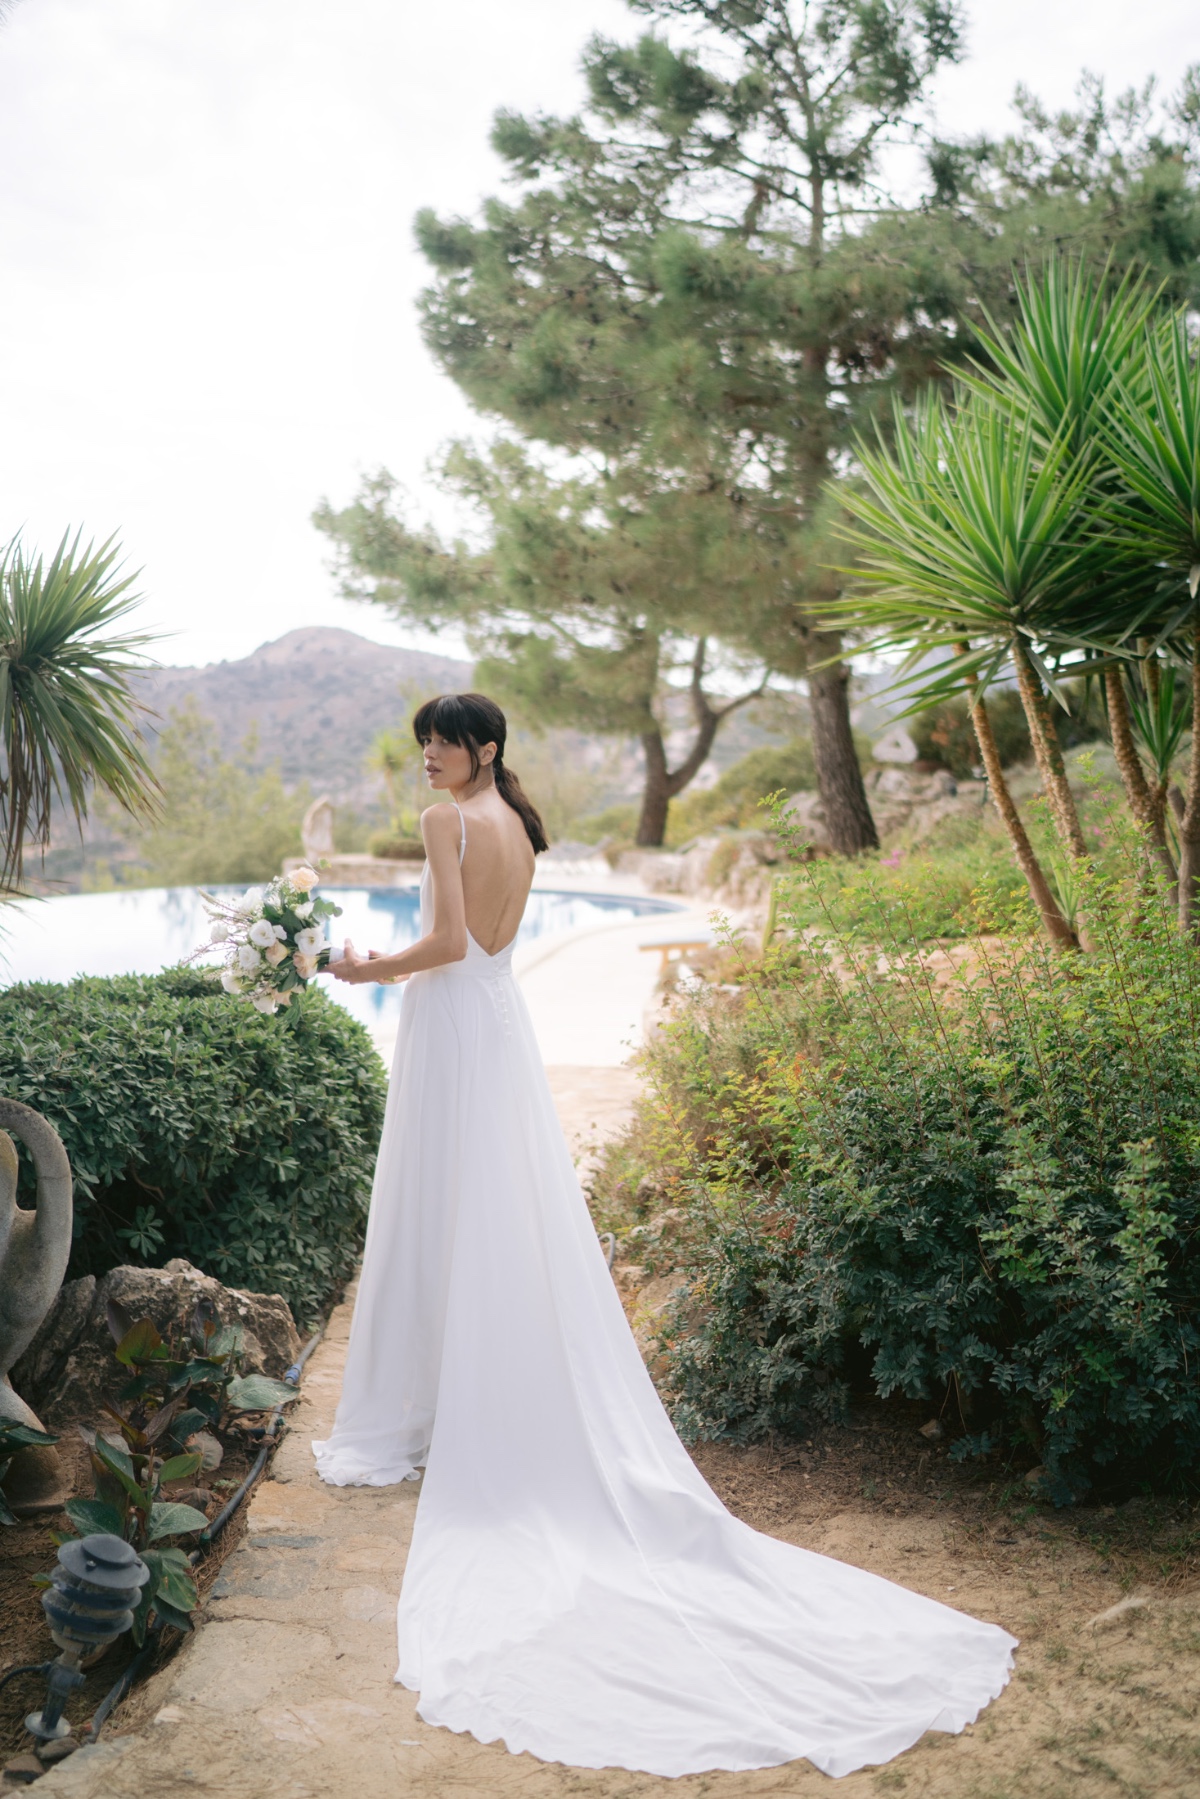 Airy, Aegean Inspo for the Au Naturale Bride